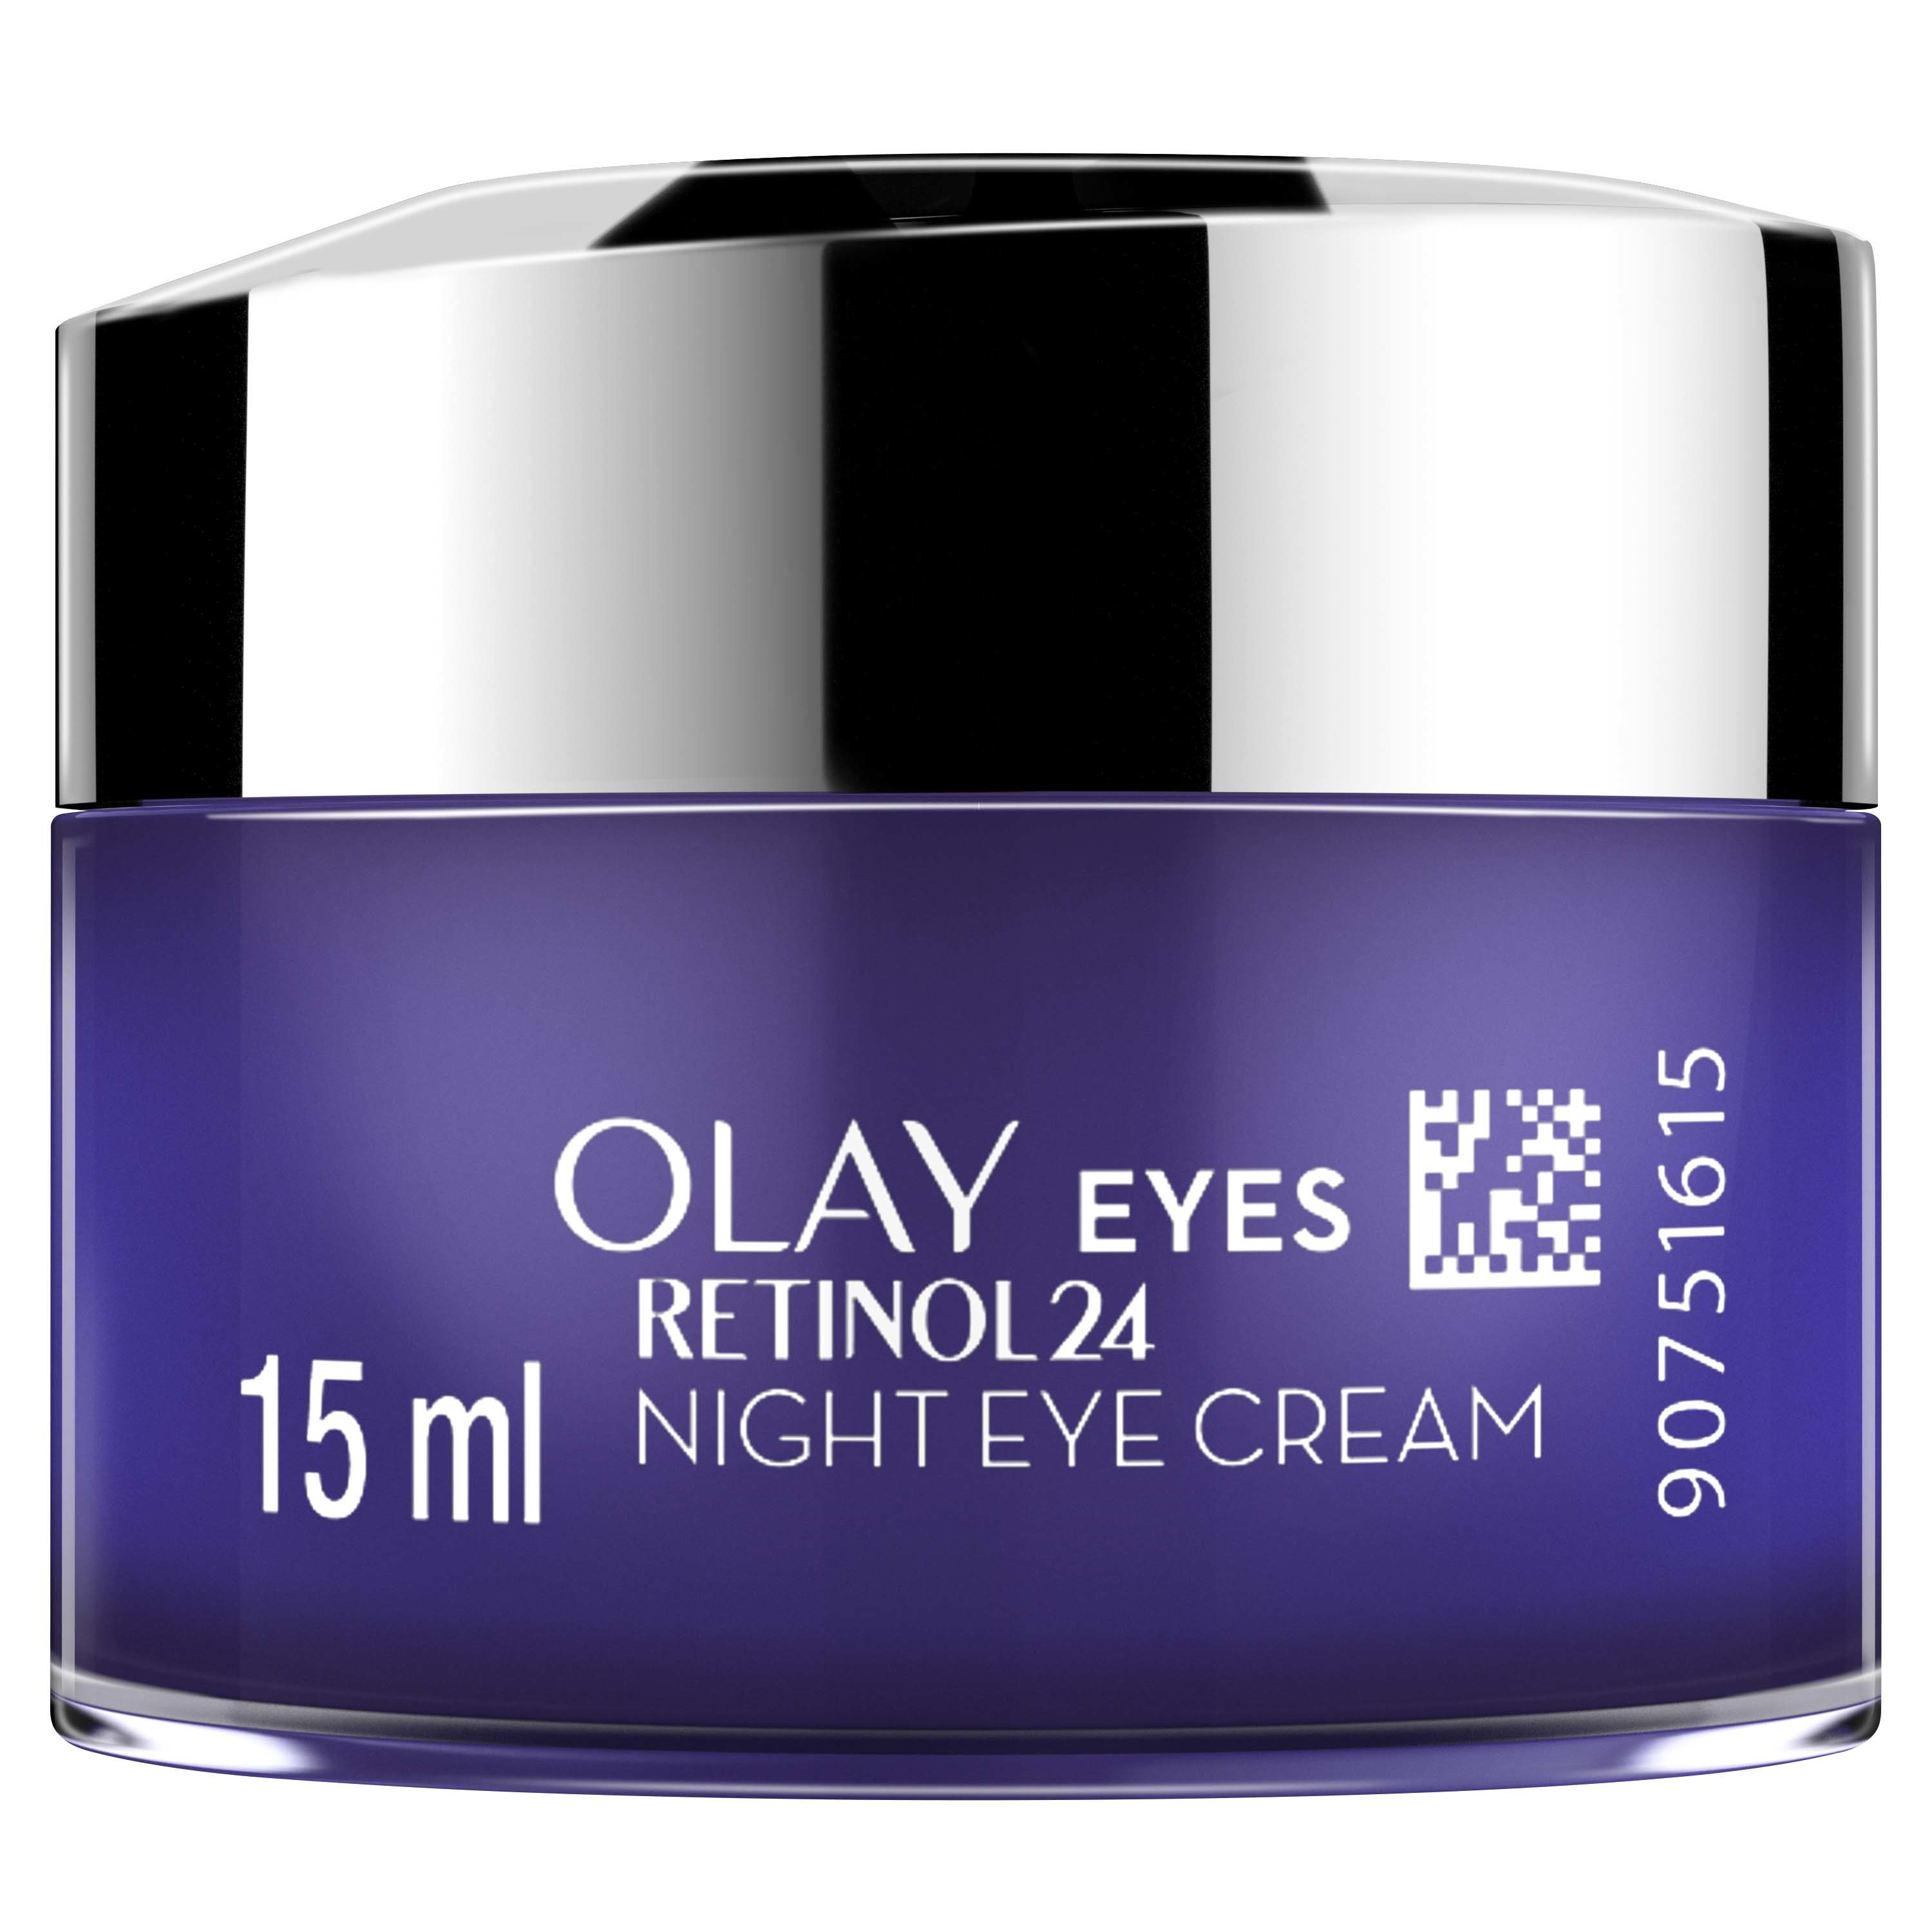 PDP PH - Olay Regenerist RETINOL24 Night Eye Cream 15ml Packshot 